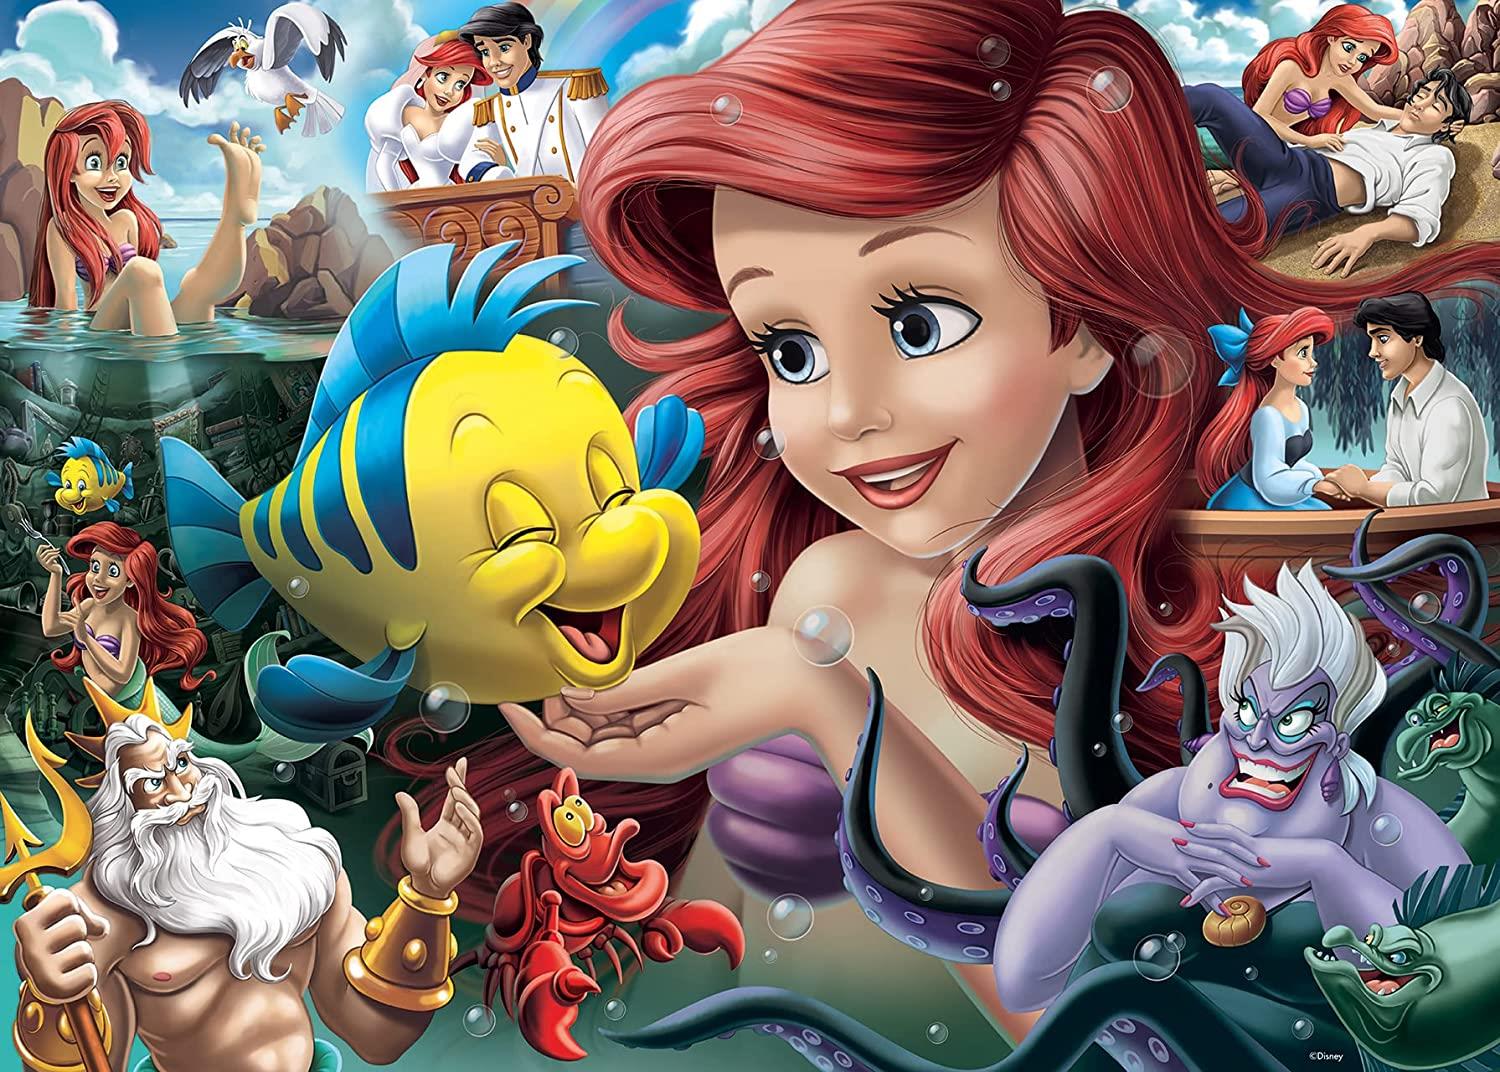 Ravensburger Disney Princess Heroines No.3 - The Little Mermaid Jigsaw Puzzle (1000 Pieces)